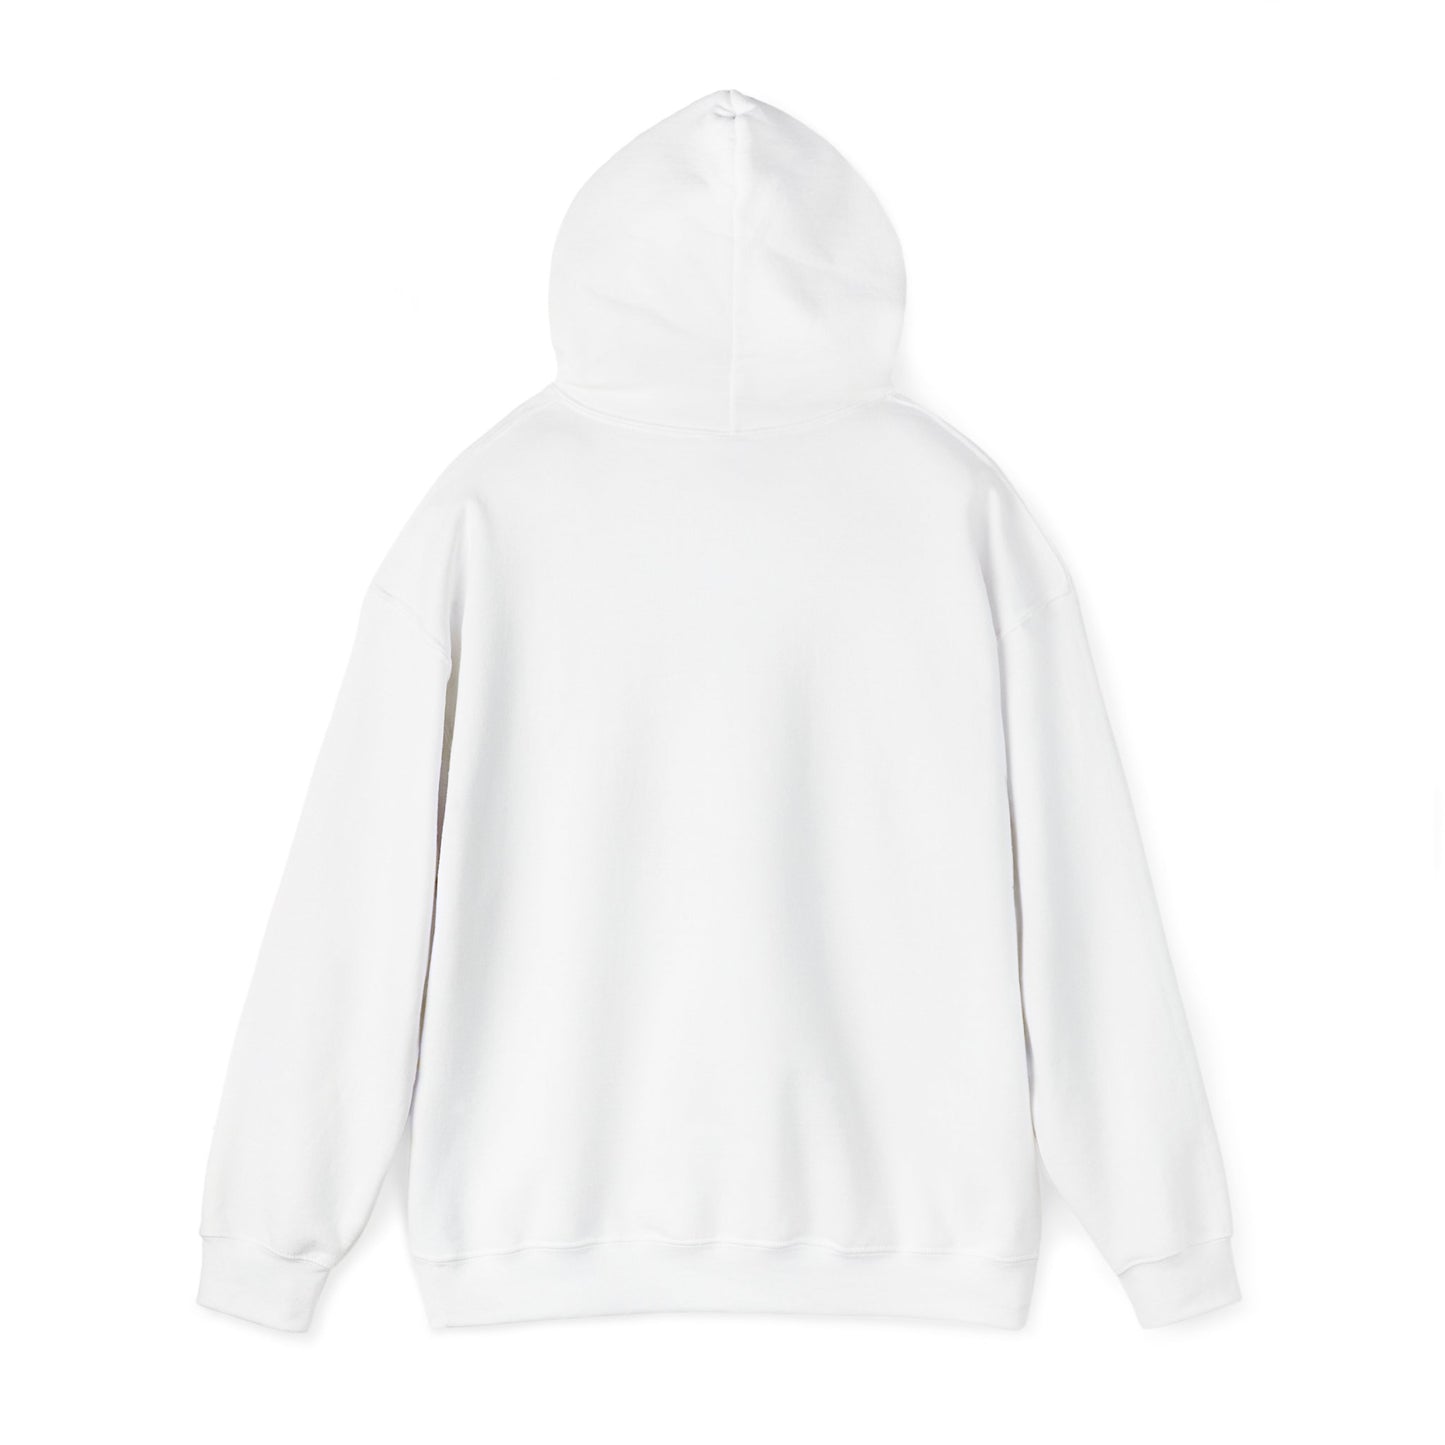 CPE TEAM OHIO Unisex Heavy Blend™ Hooded Sweatshirt